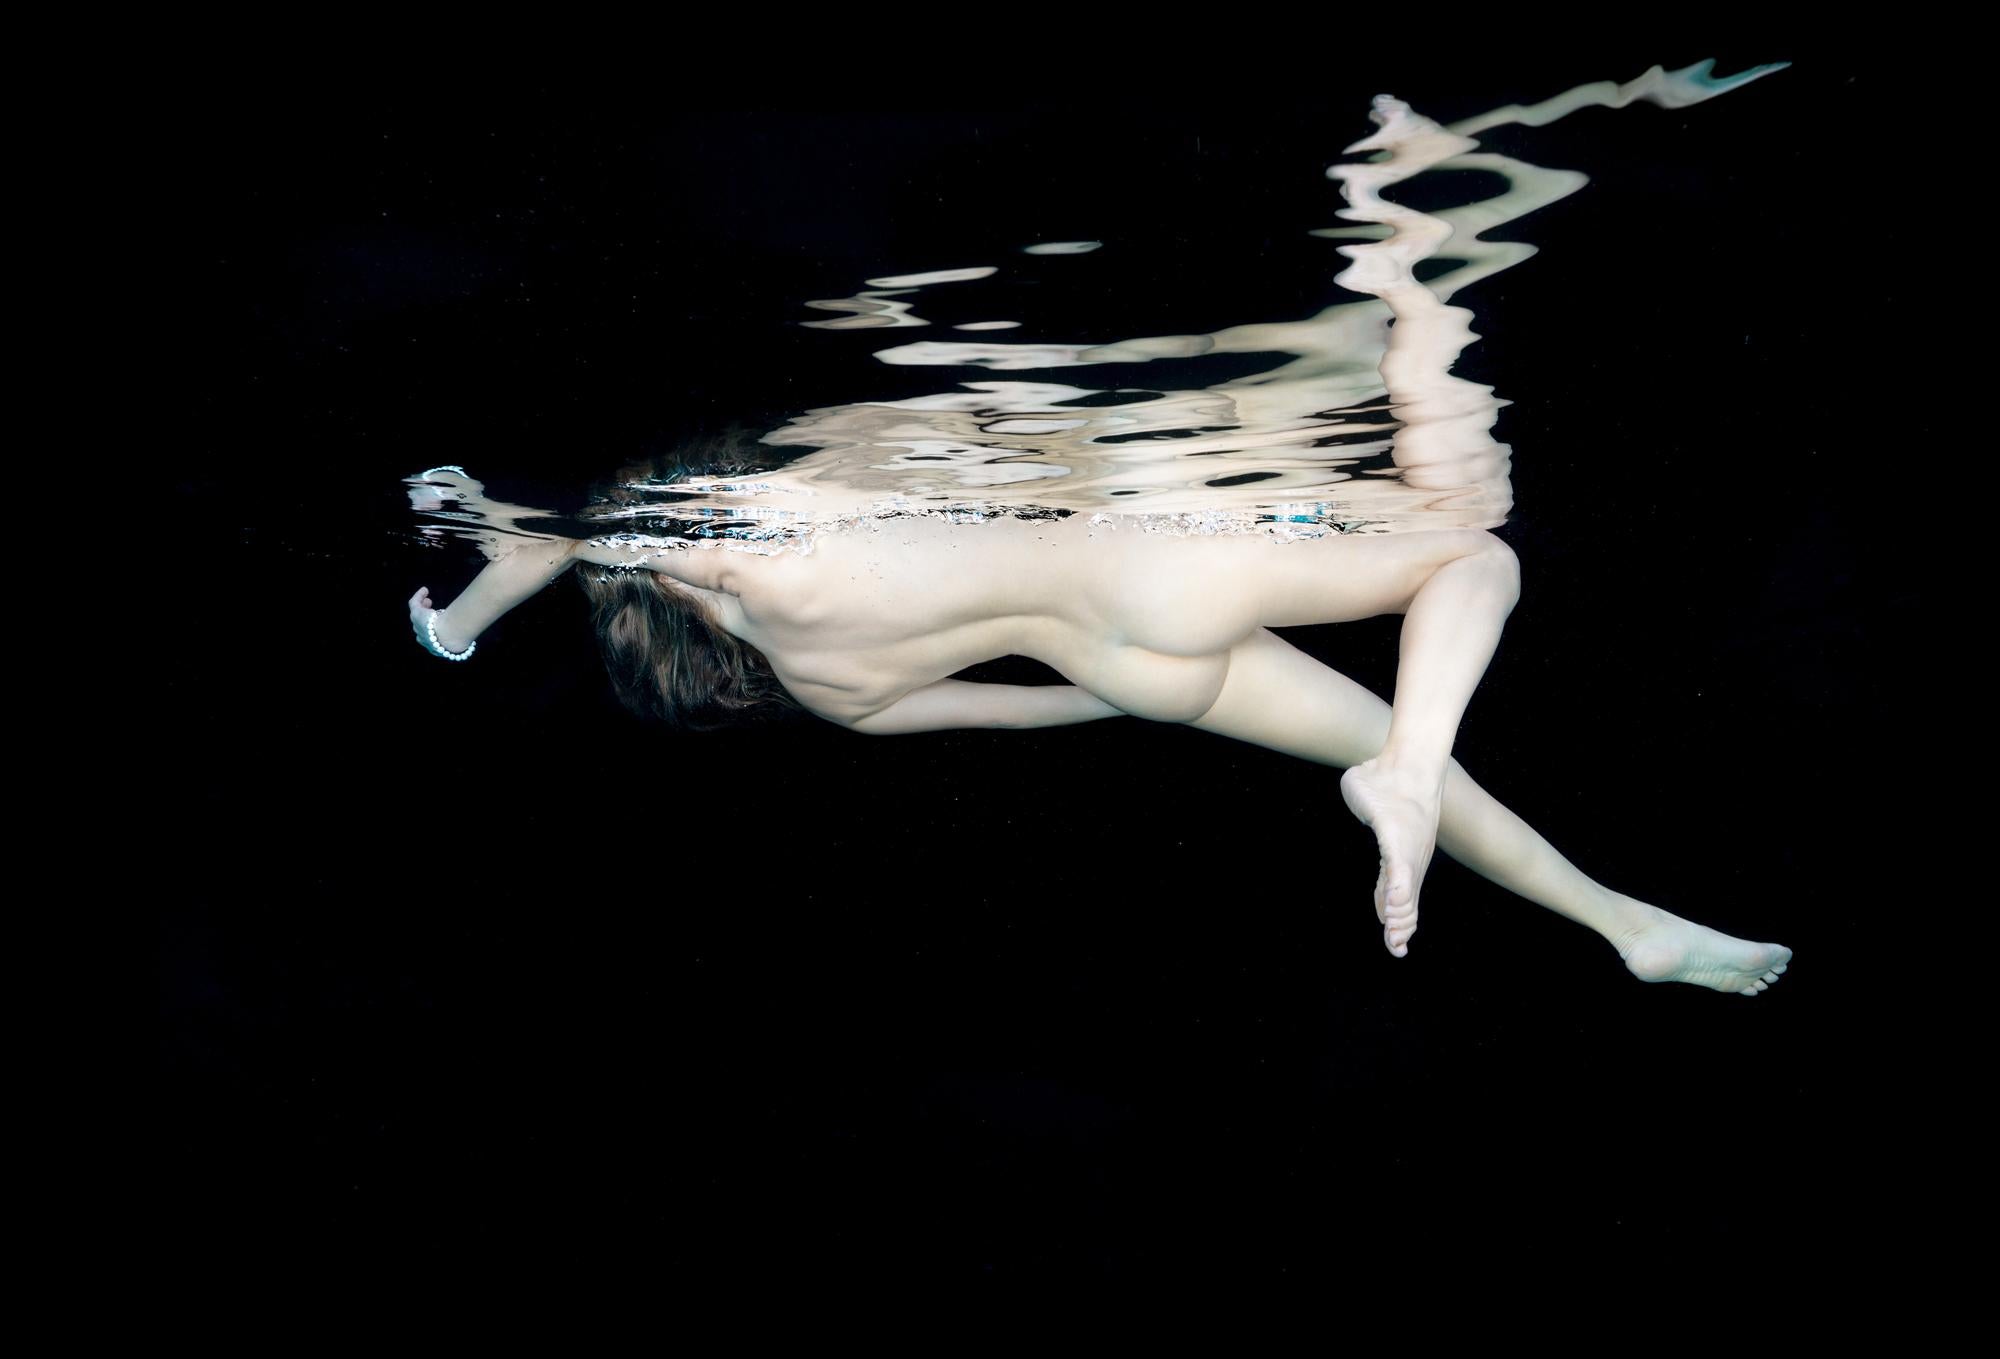 Alex Sher Figurative Photograph - Porcelain II  - underwater nude photograph - acrylic print 24x36"